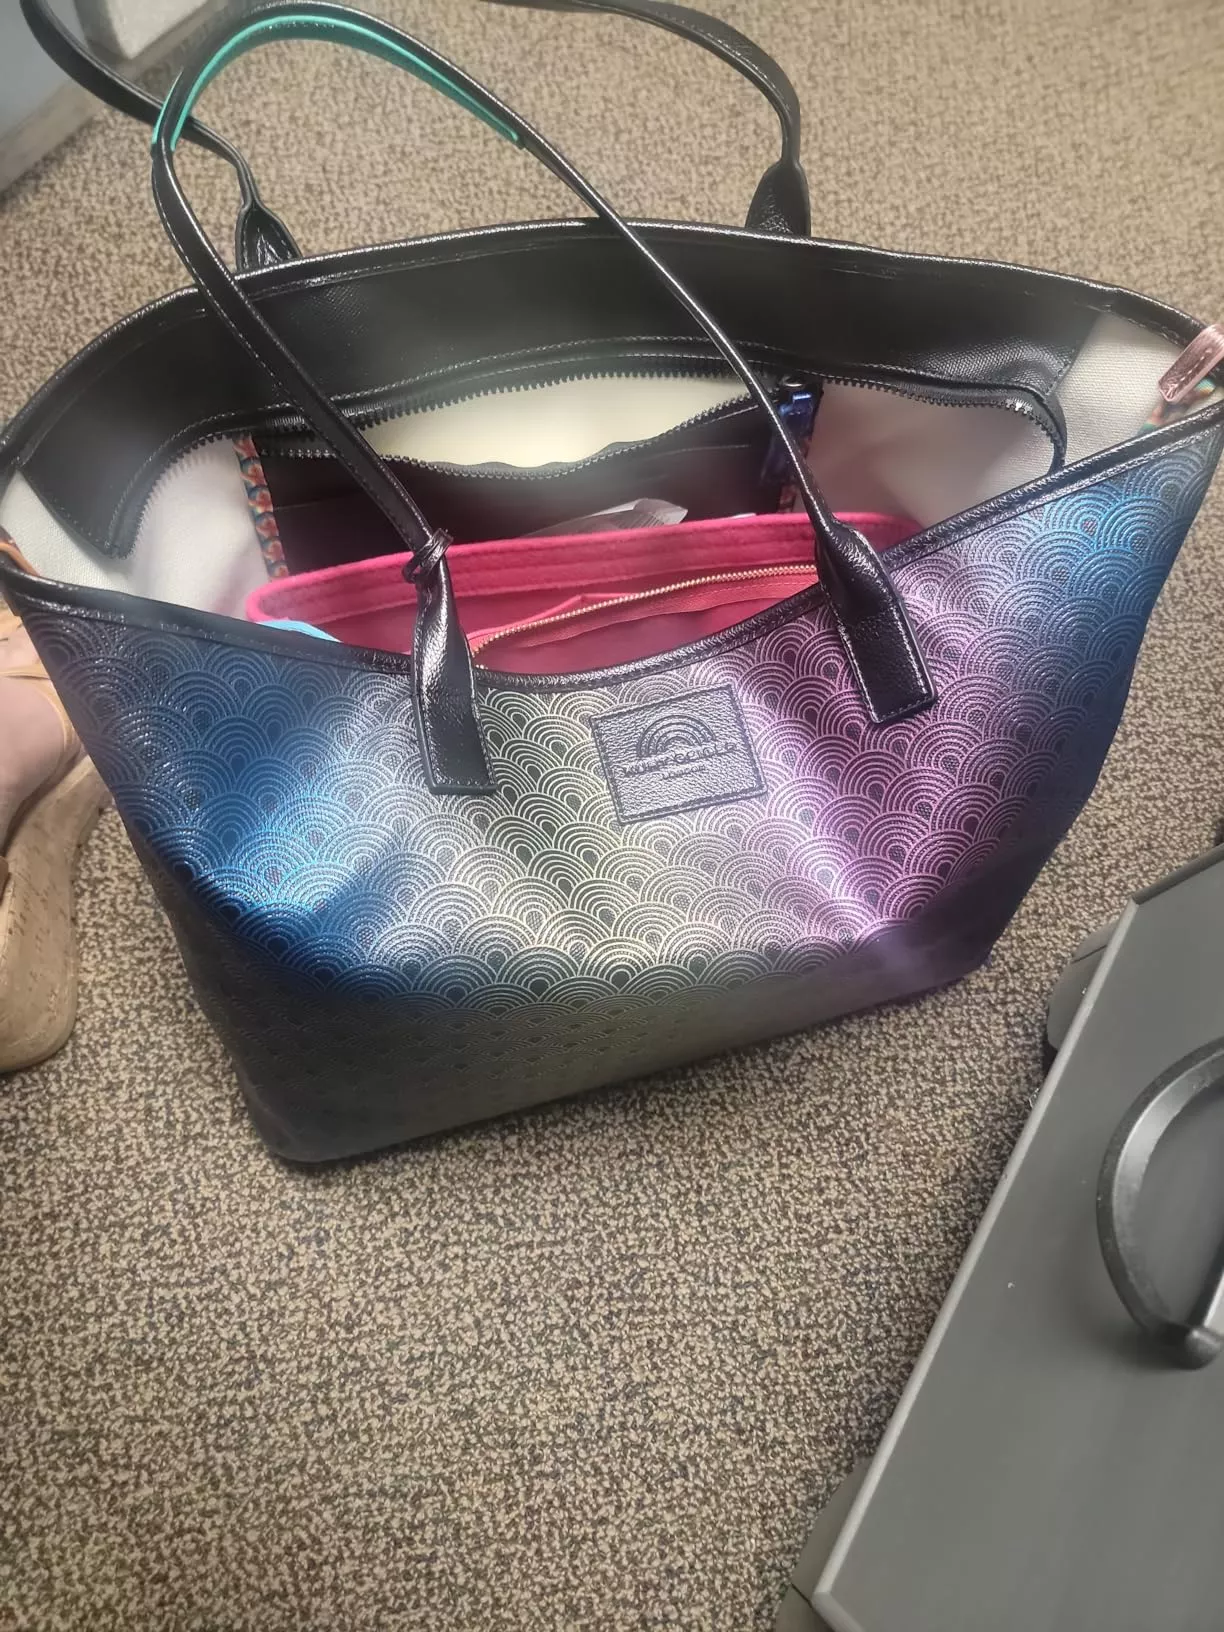 LEXSION Felt Purse Bag Organizer Insert with zipper Bag Tote